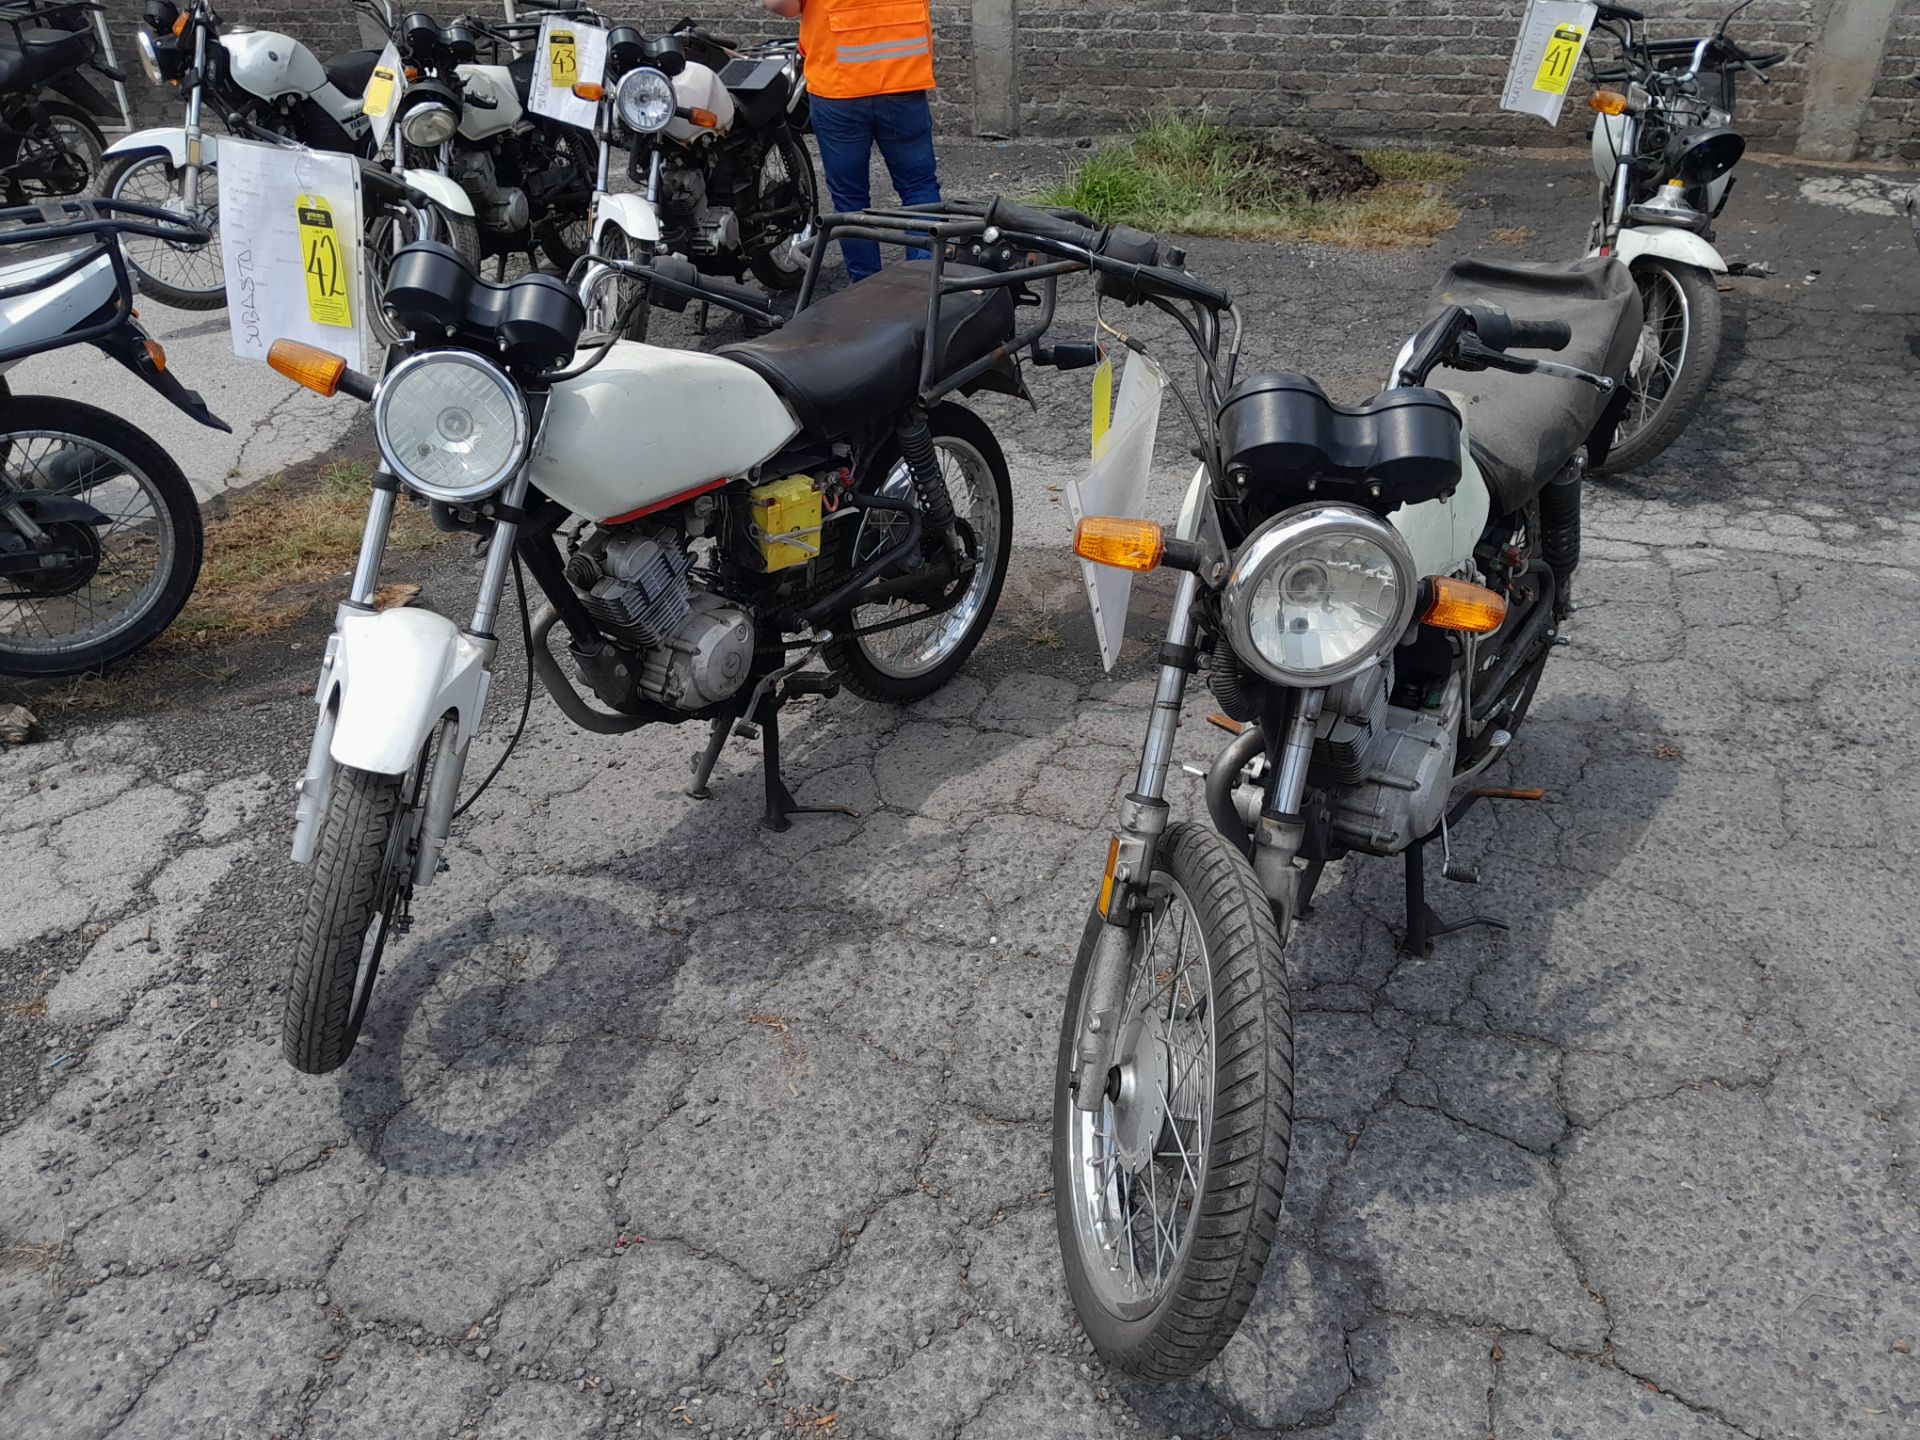 Lote de 2 Motocicletas contiene: 1 Motocicleta de trabajo usada Marca Yamaha YB 125, Modelo 2016, N